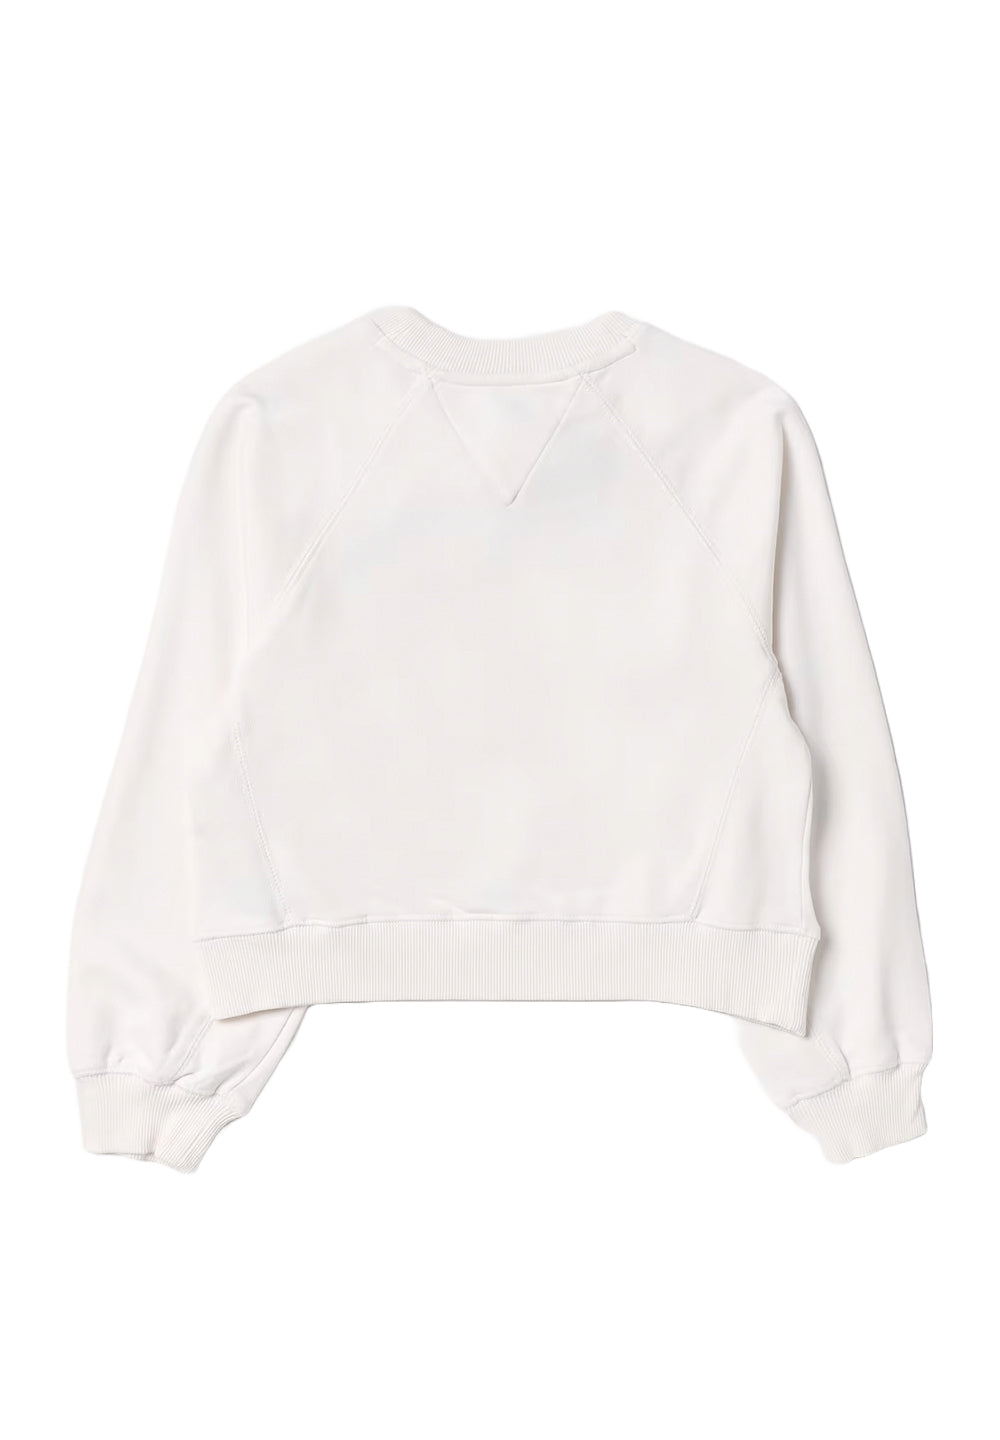 White crewneck sweatshirt for boy